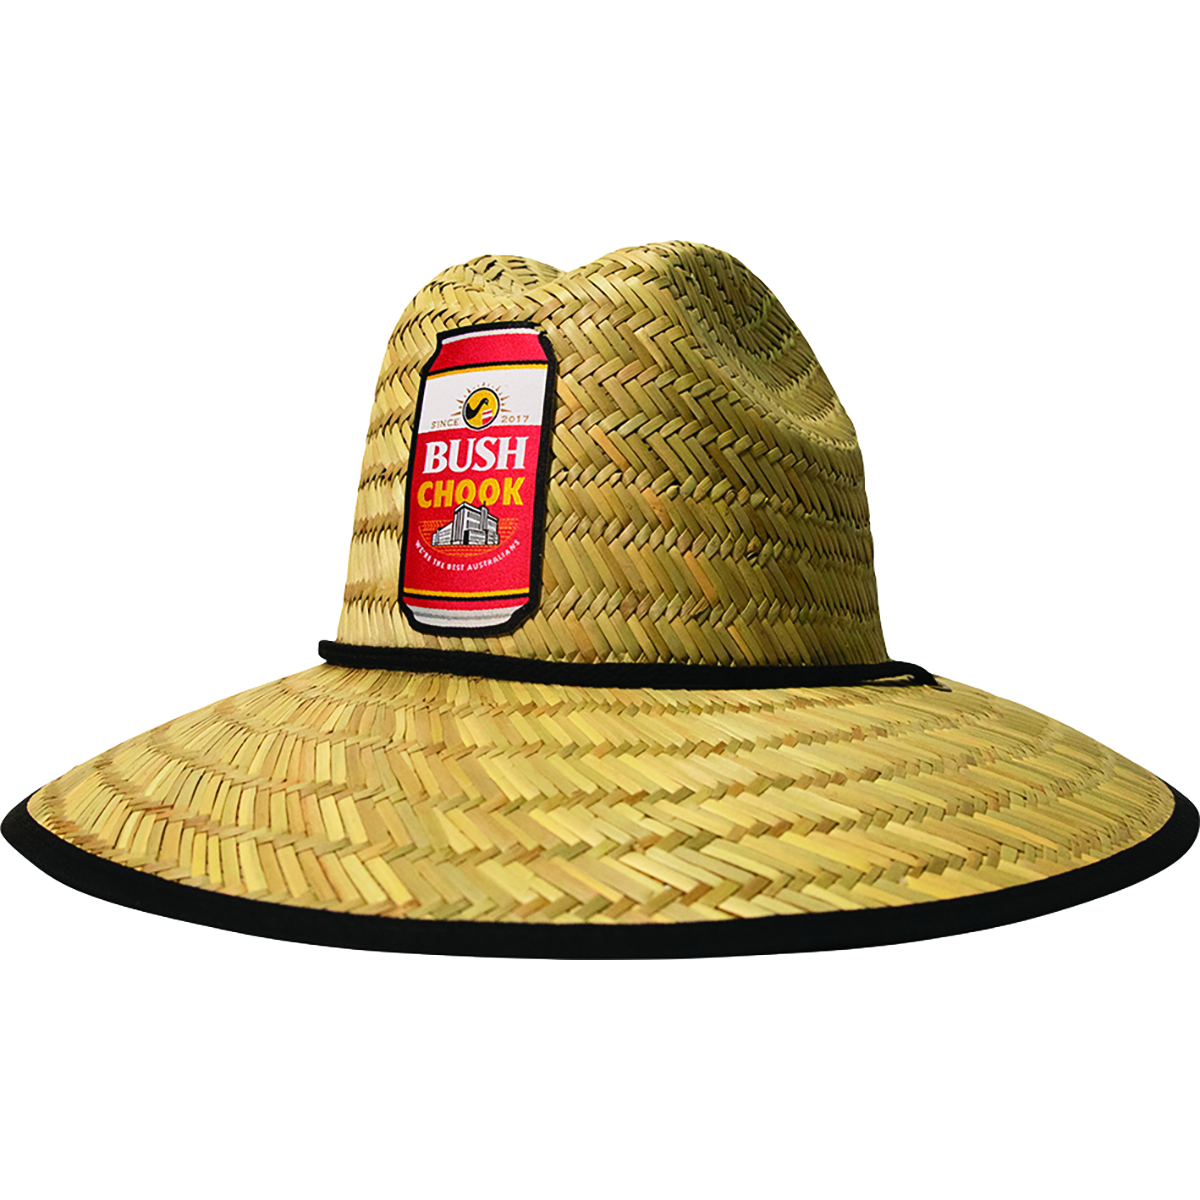 Bush Chook Men's Canned Chook Straw Hat Natural L/XL